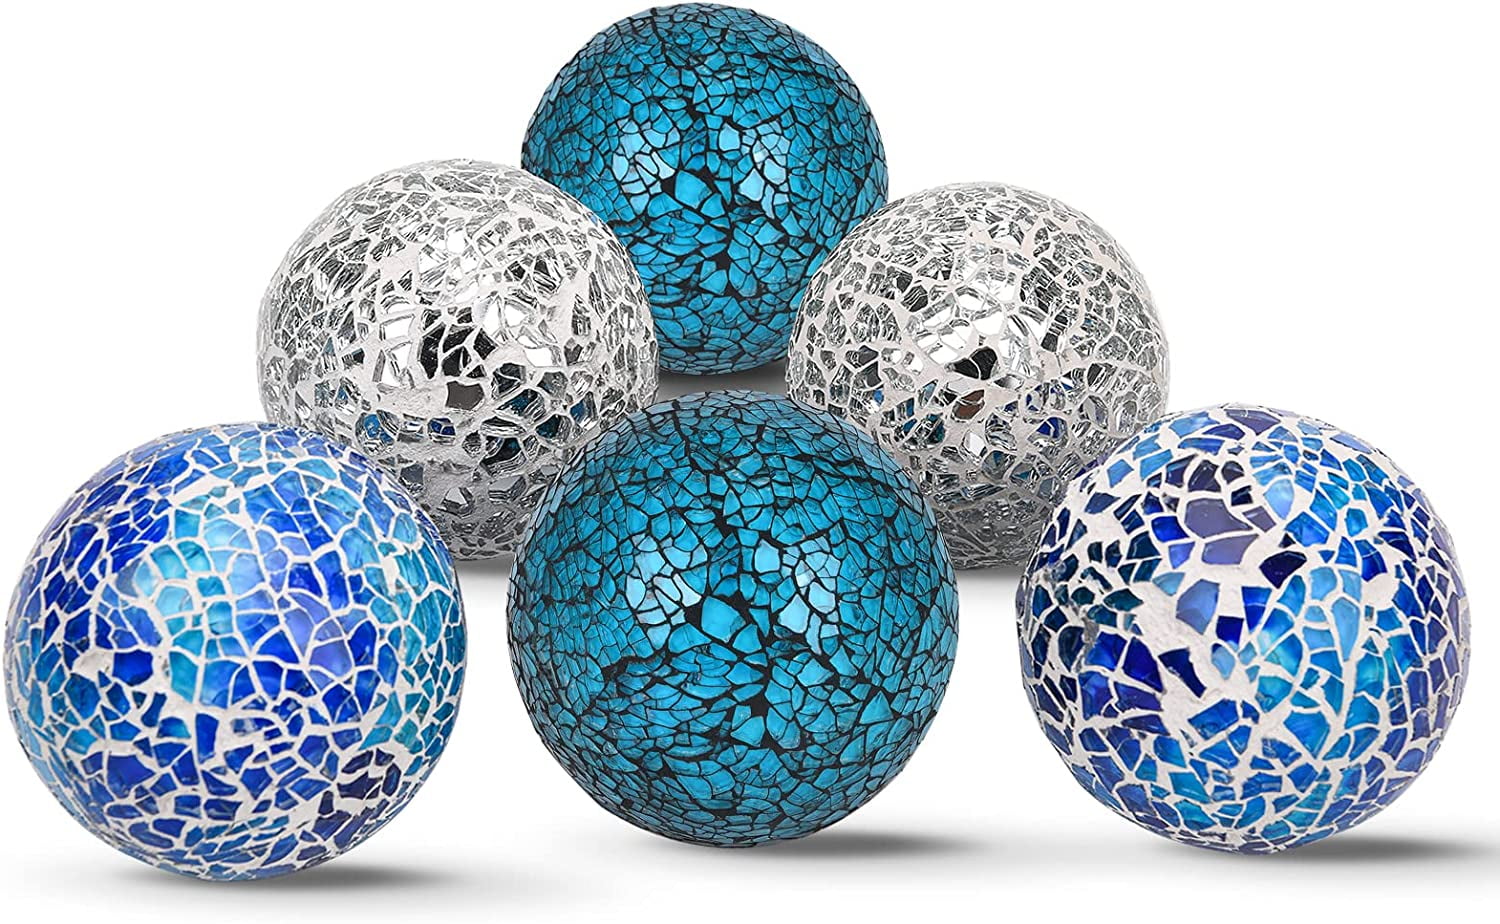 Decorative Carved Wood Balls